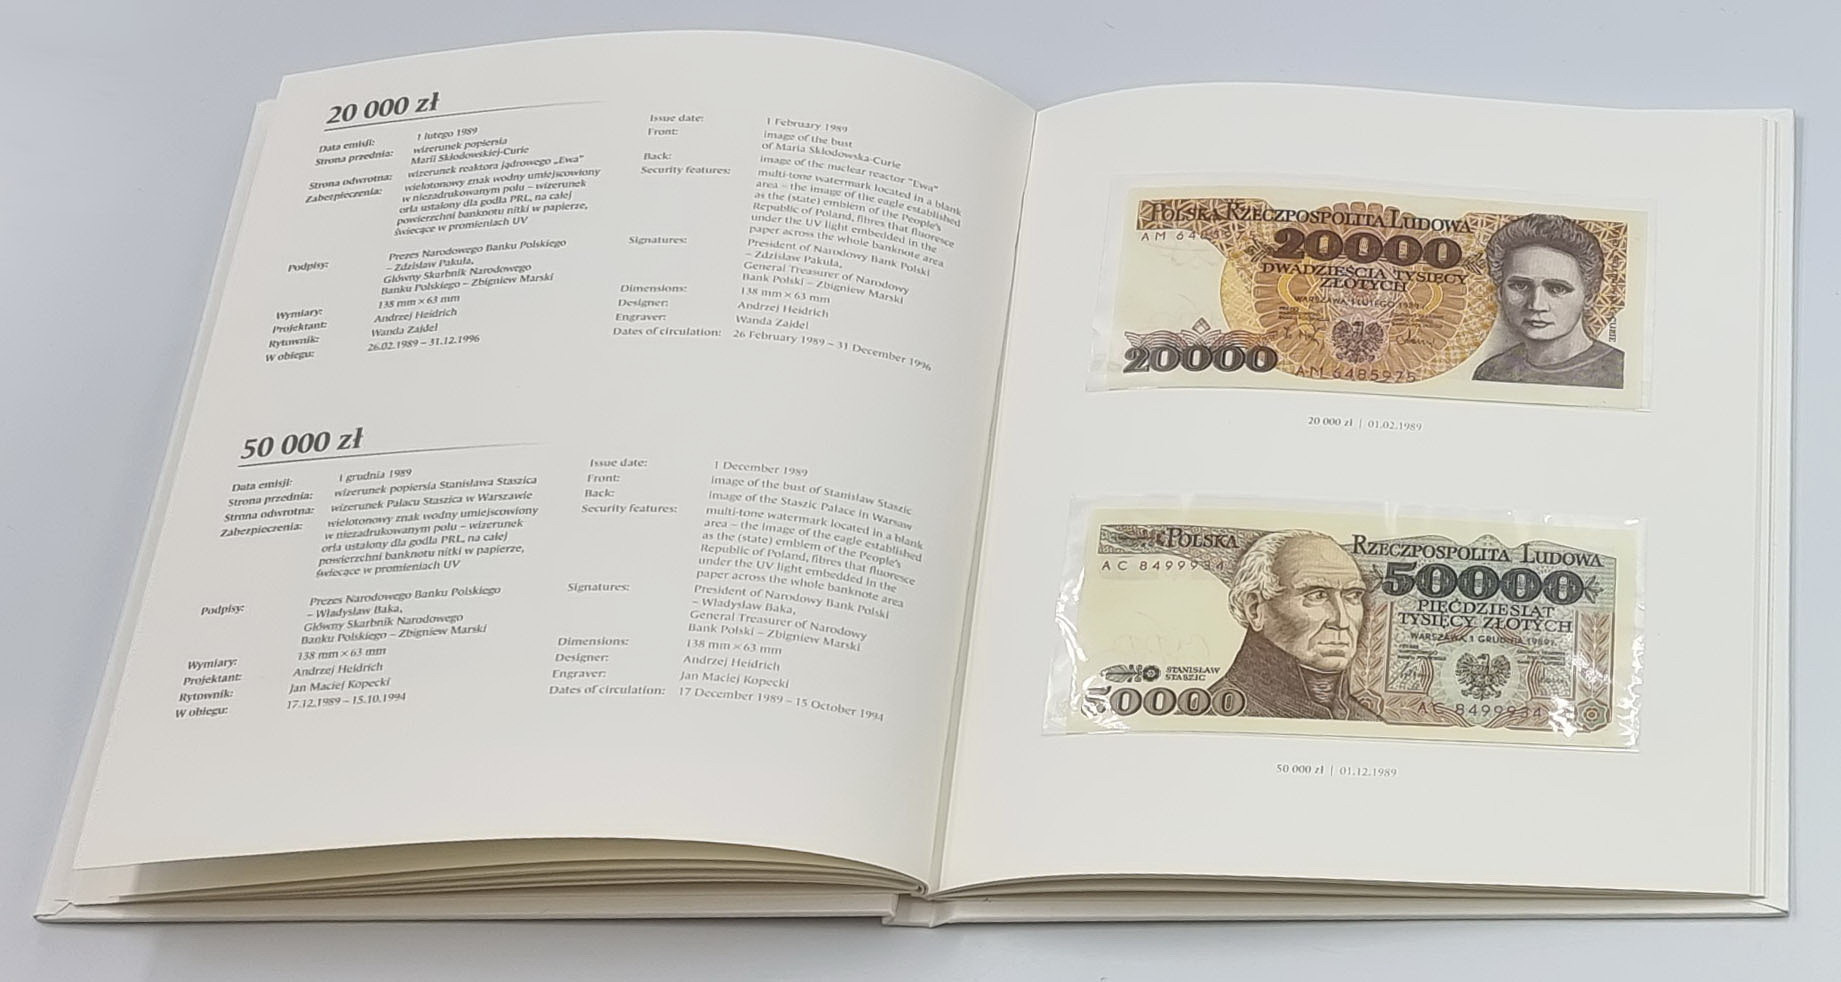 Klaser z 23 banknotami - polskie banknoty obiegowe z lat 1975-1996 - KOMPLET